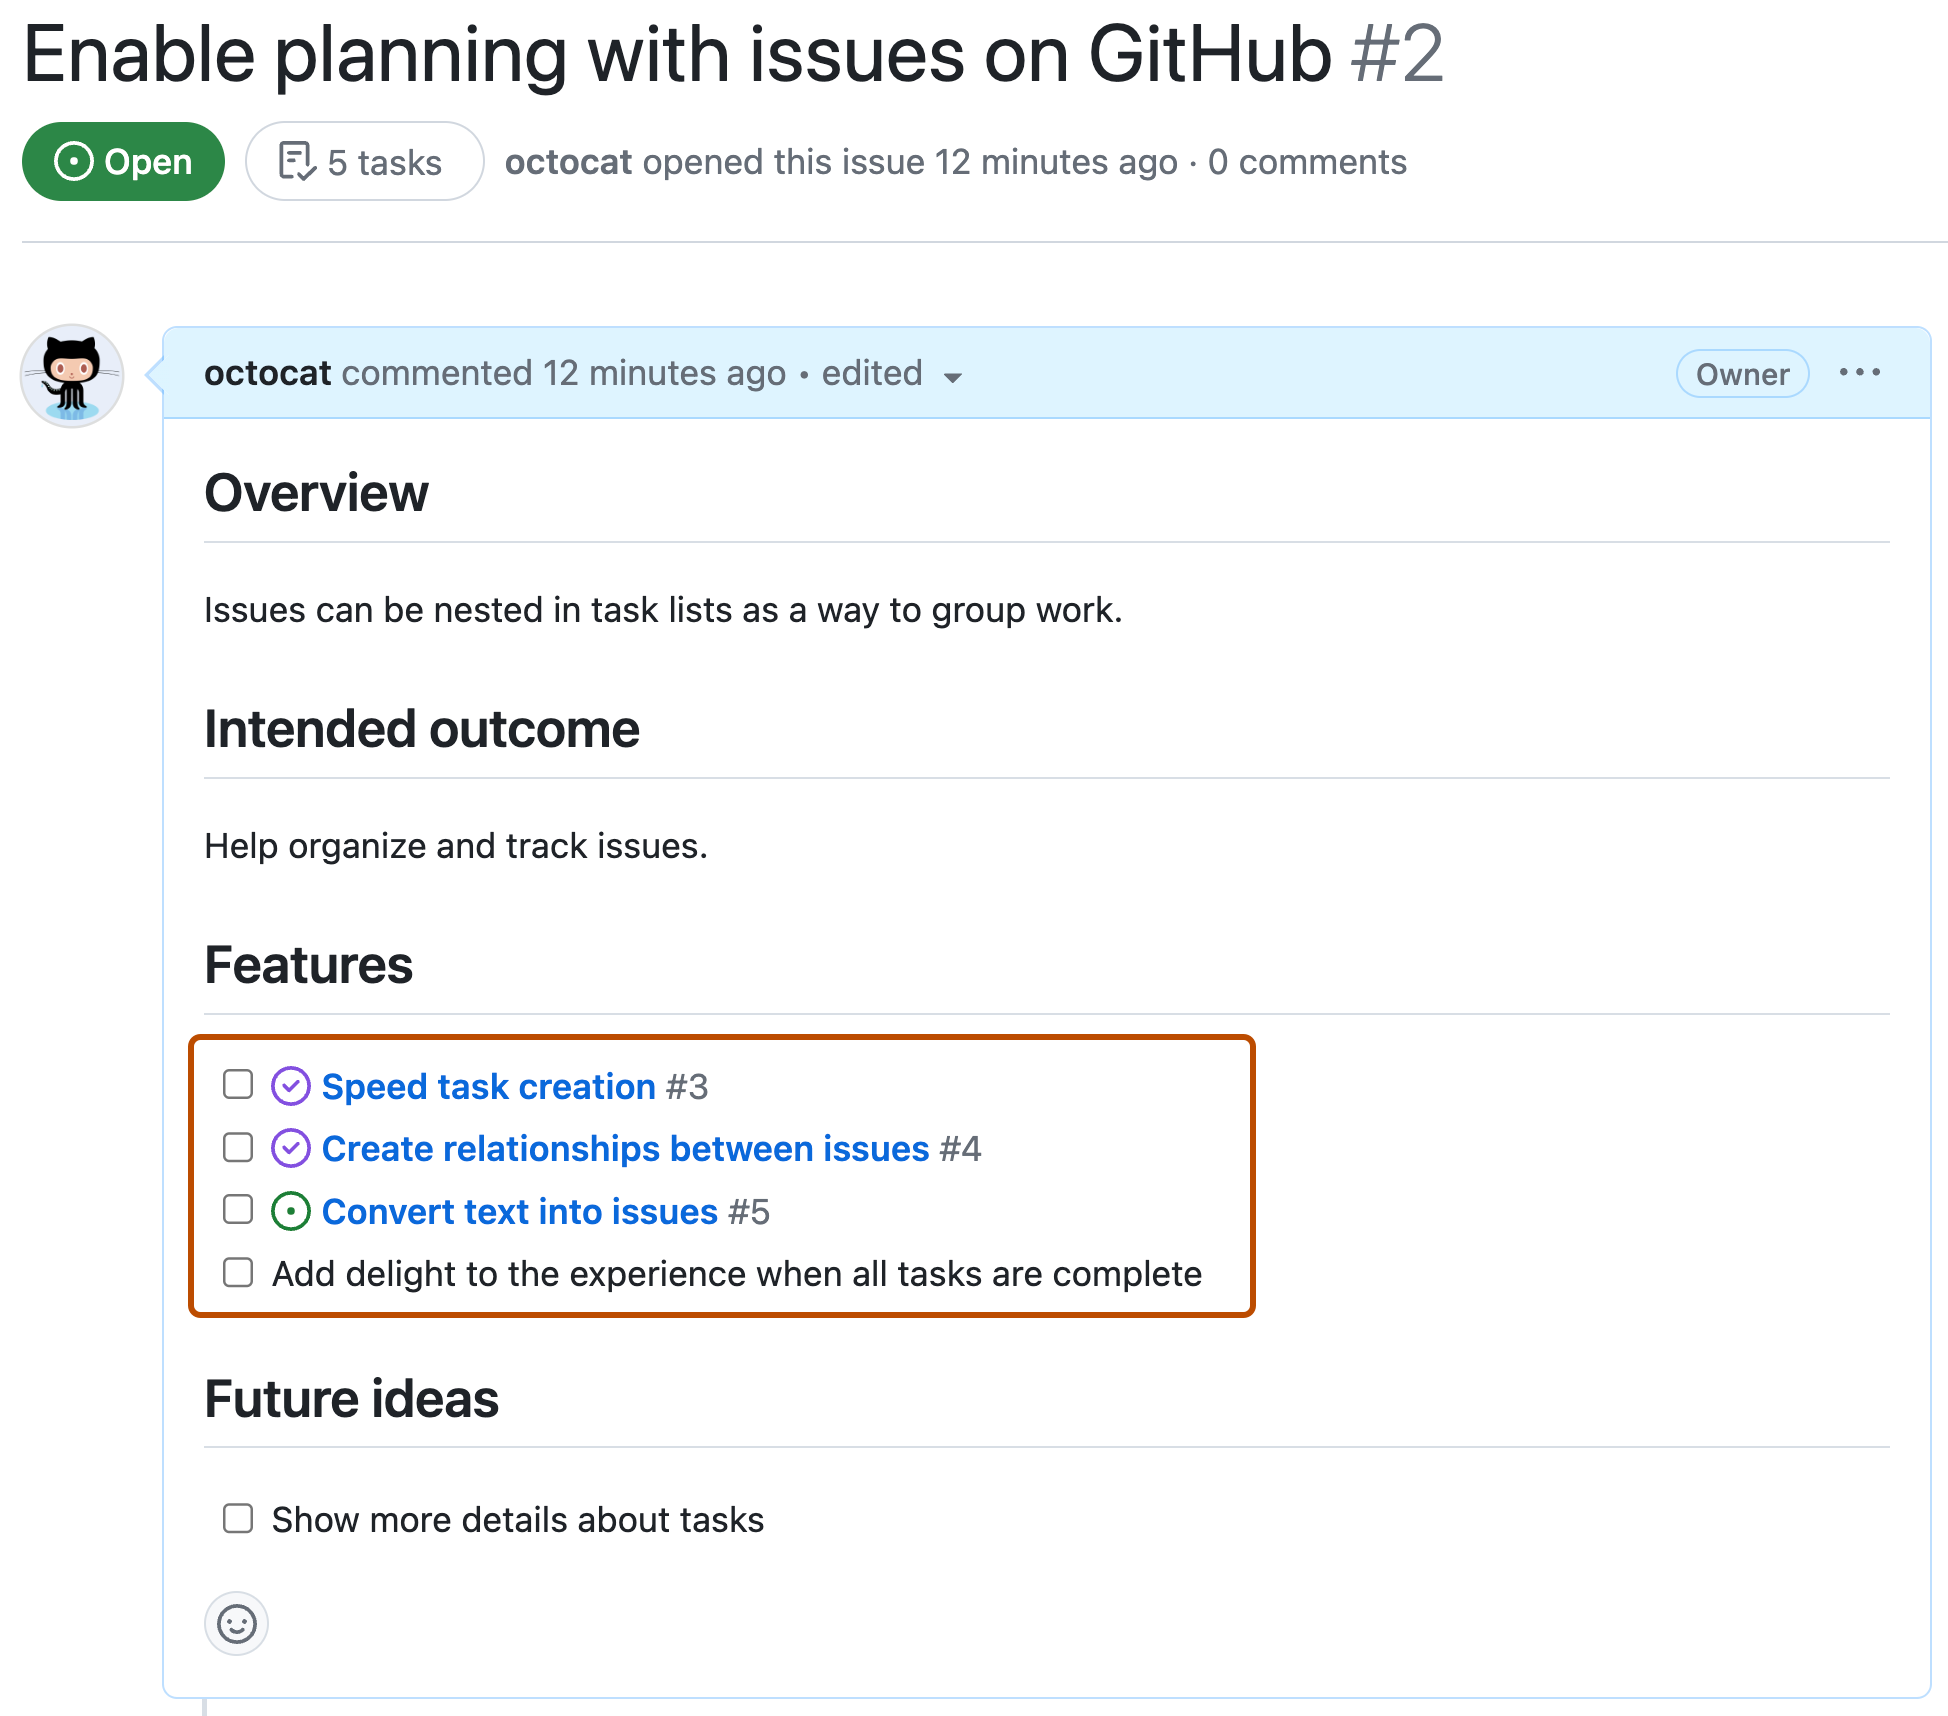 GitHub 问题的屏幕截图，其中显示了标题“功能”下的任务列表。 某些项目被选中（状态为已完成），而其他项目未选中（状态为未完成）。 三个列表项链接到其他 GitHub Issues。